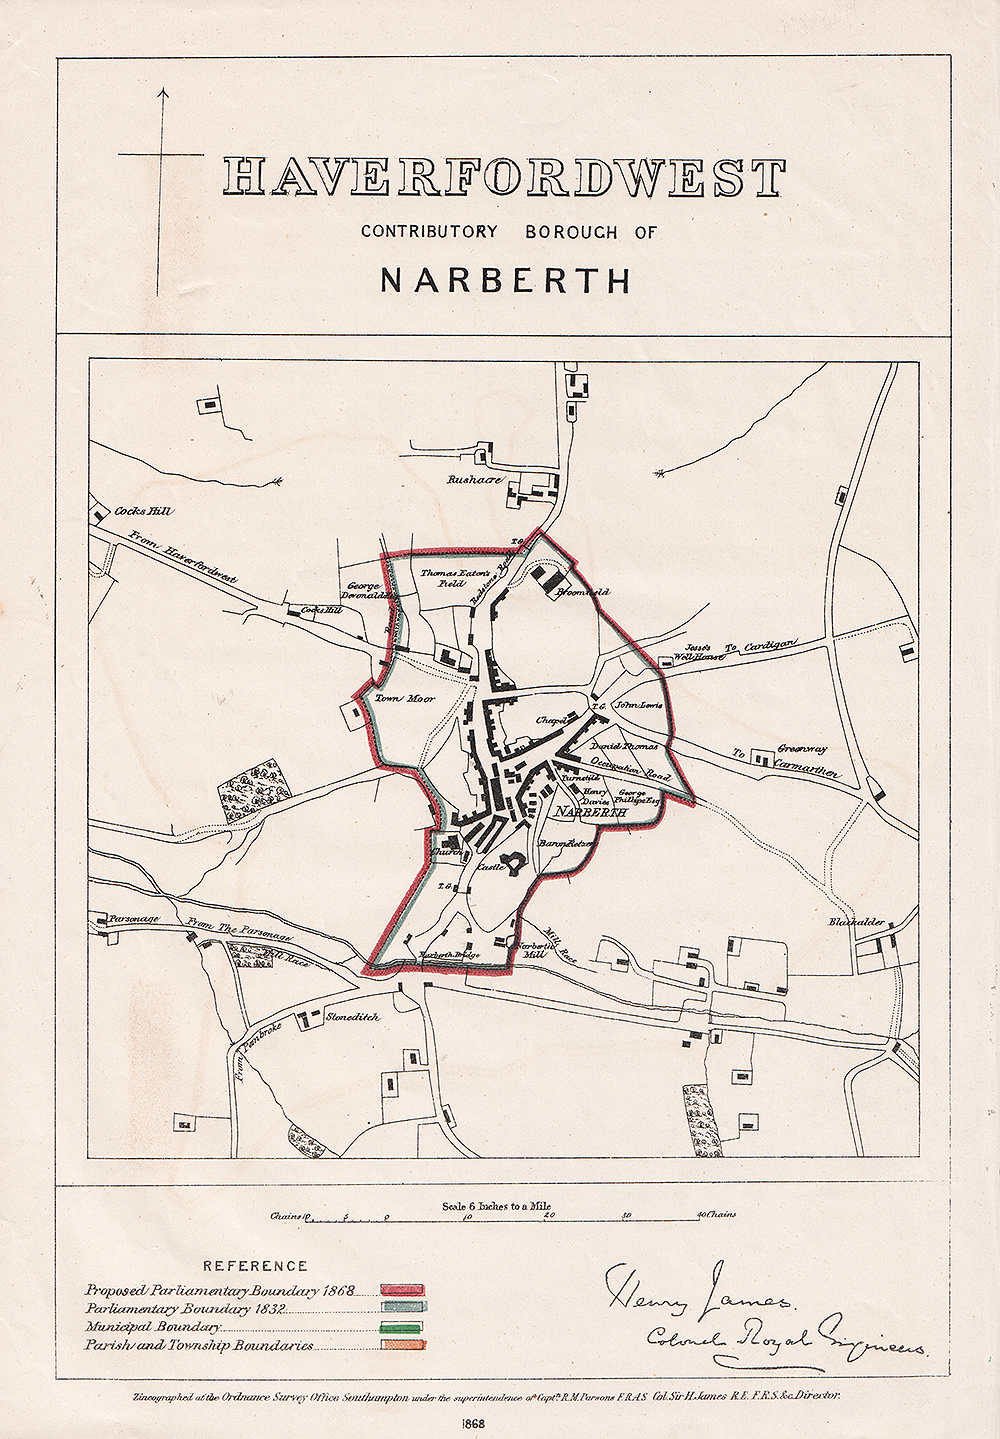 Contributory Borough of Narberth